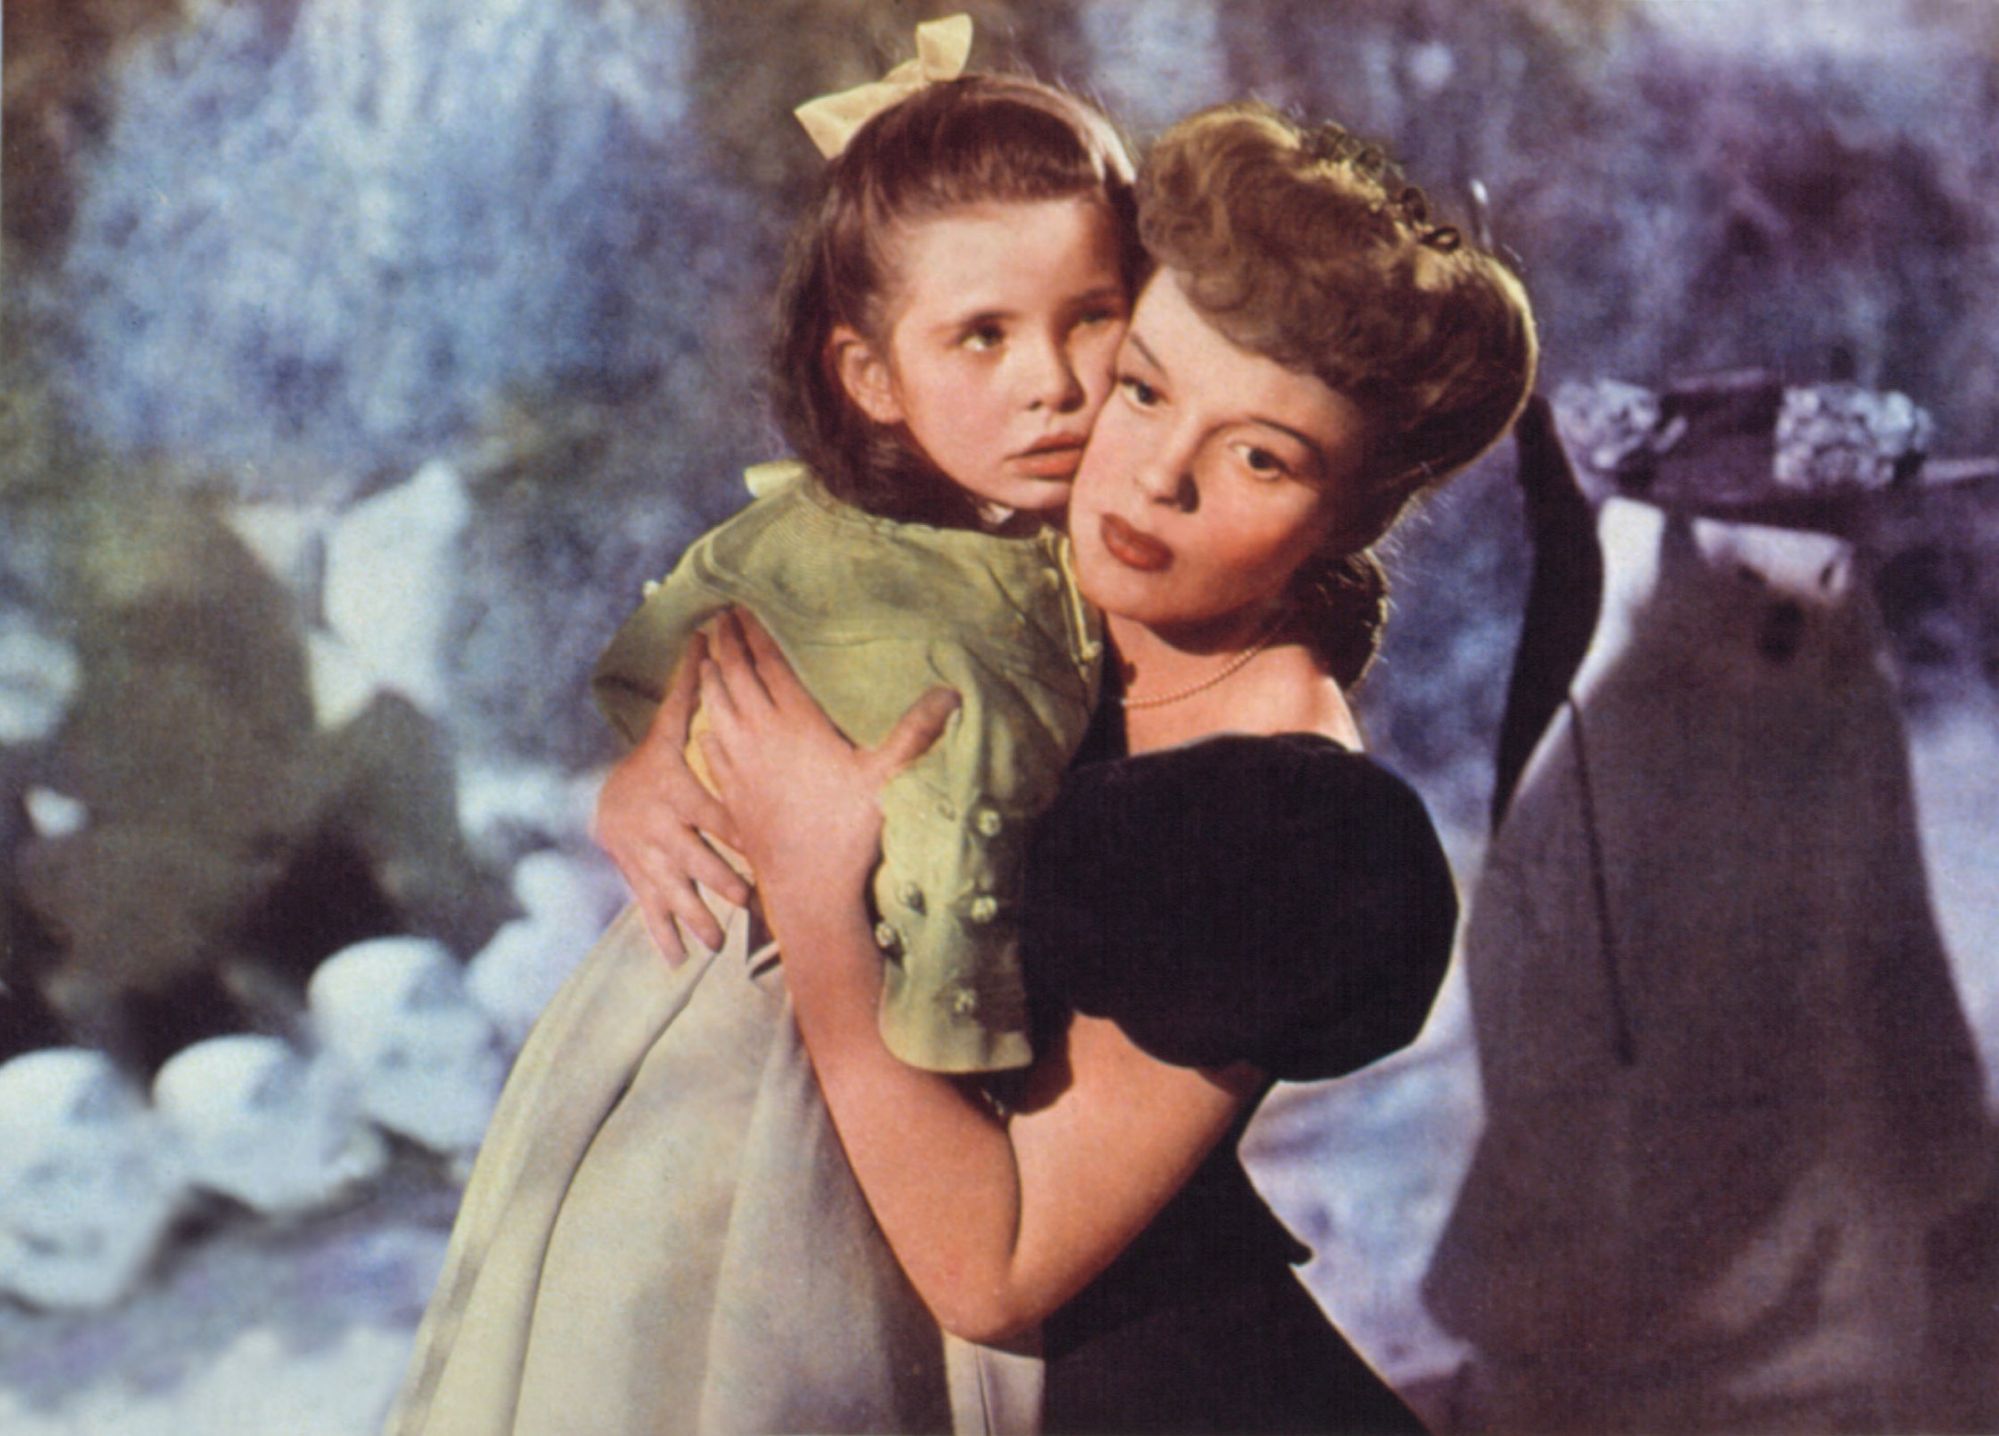 Judy Garland comforts a young Margaret O'Brien